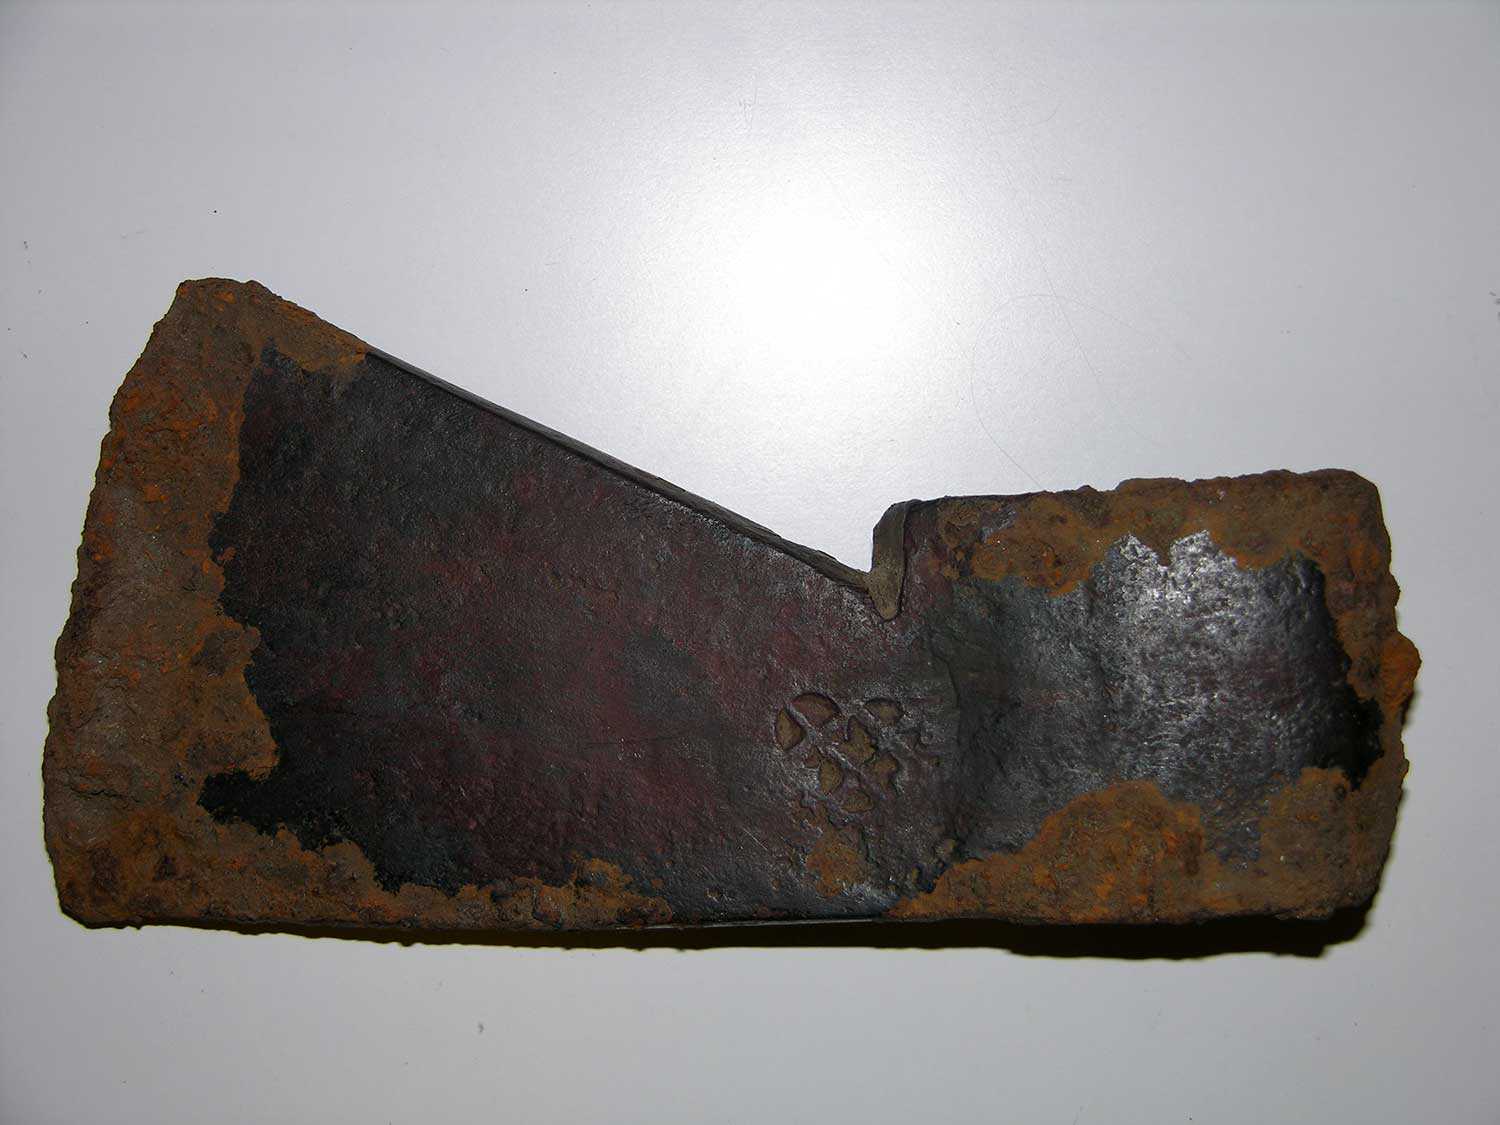 17th-century French trade axe